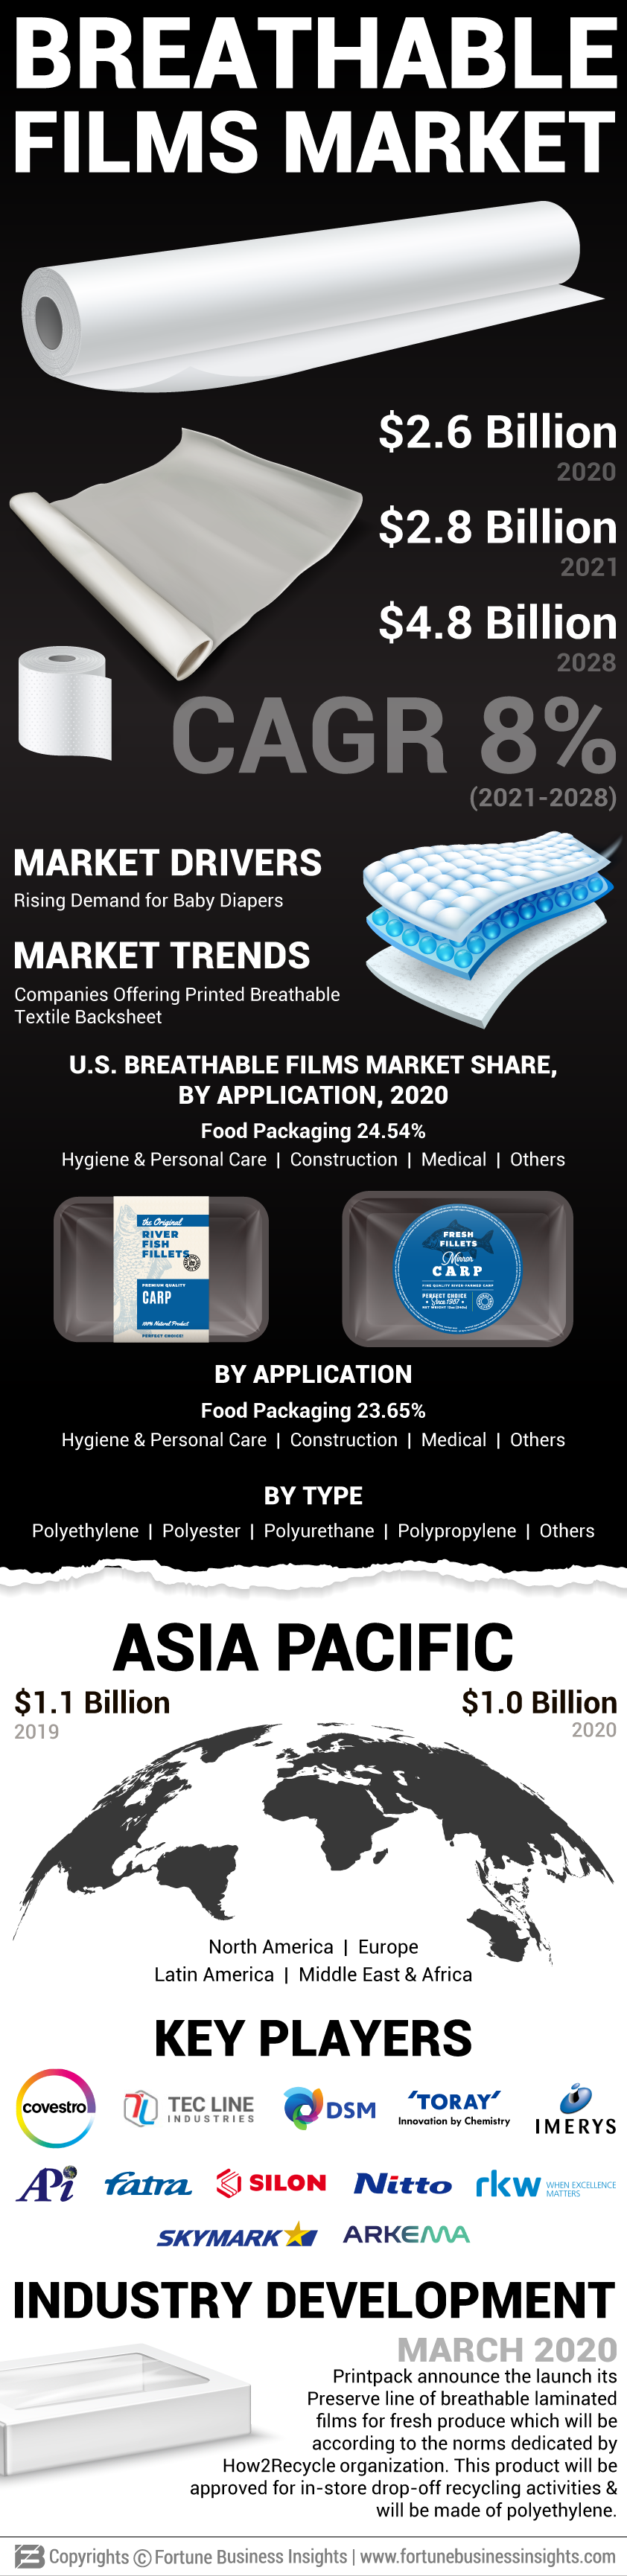 Breathable Films Market 